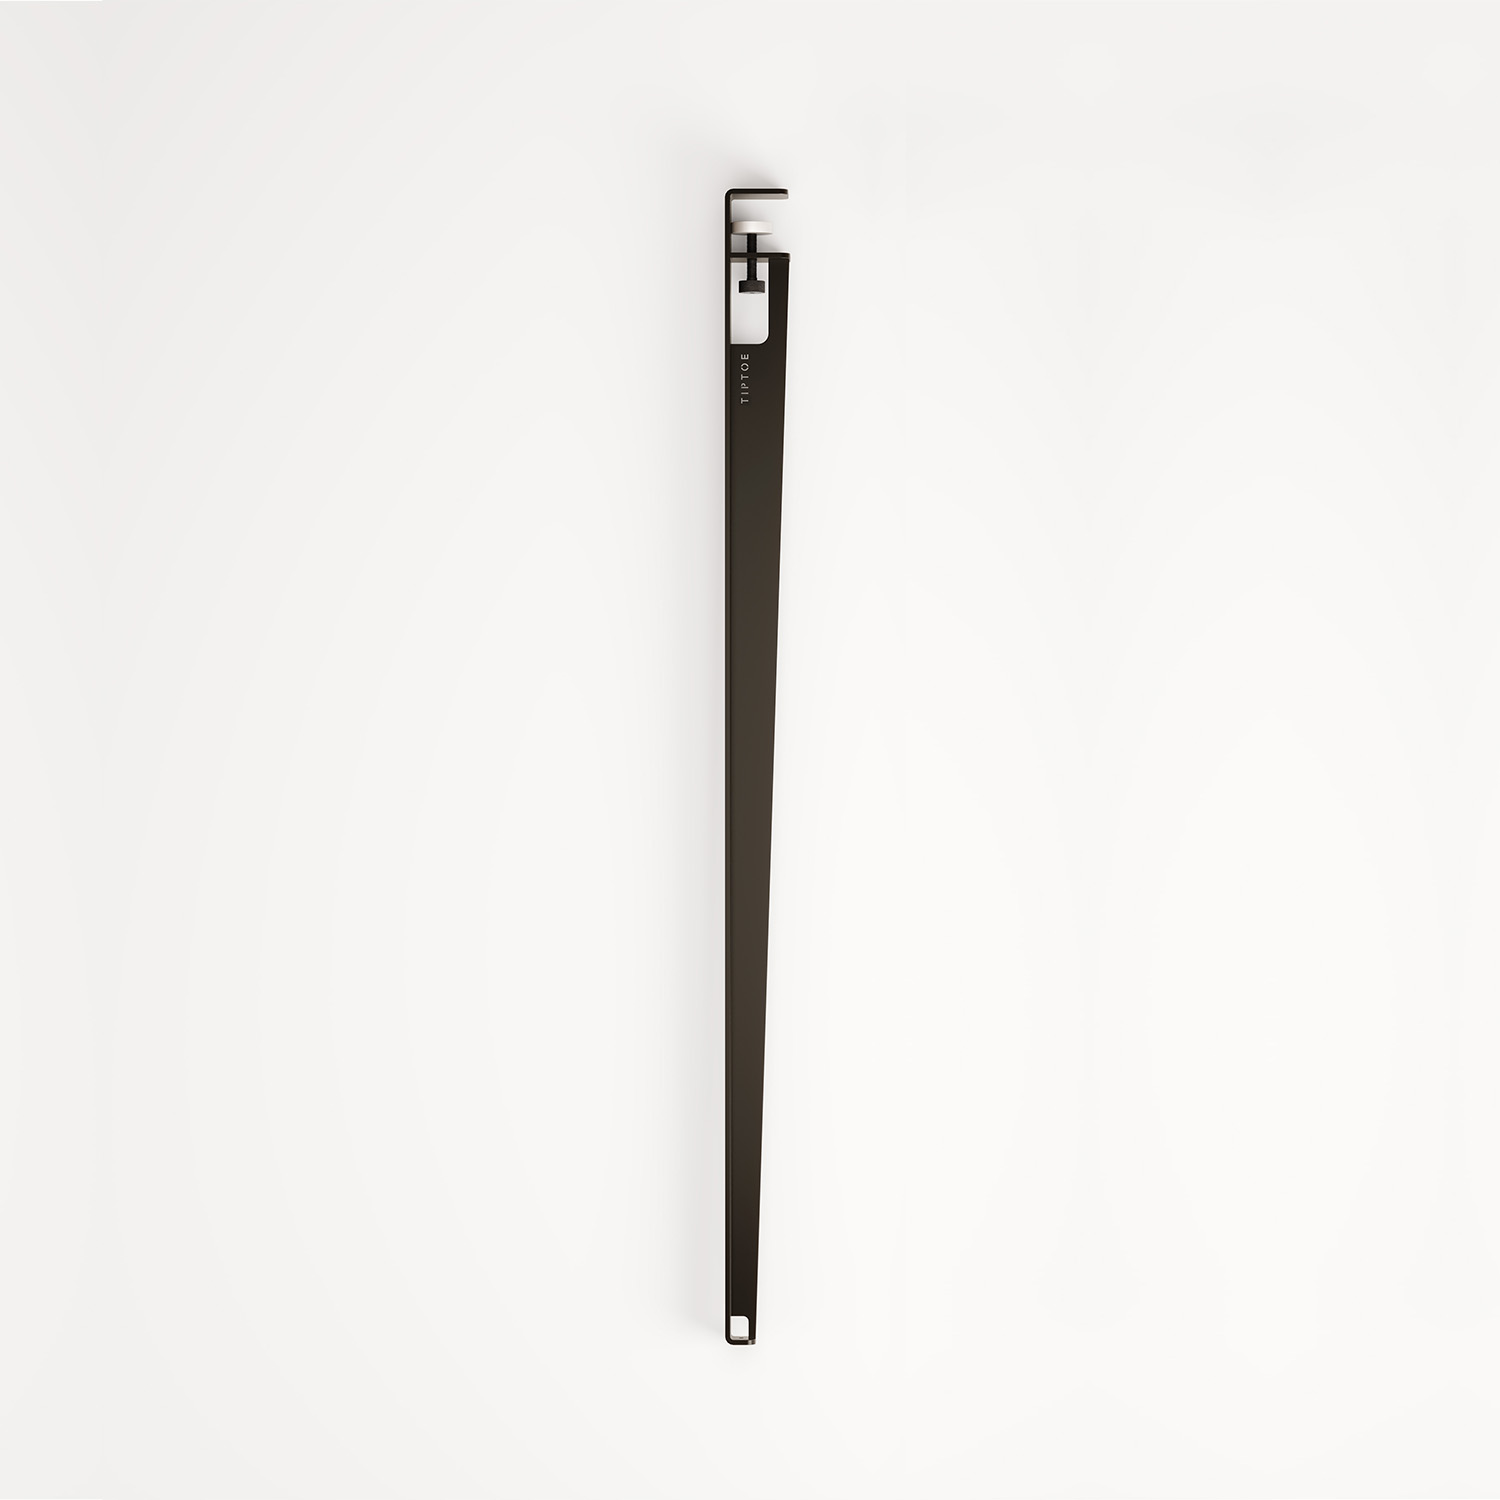 Bar table leg – 110 cm